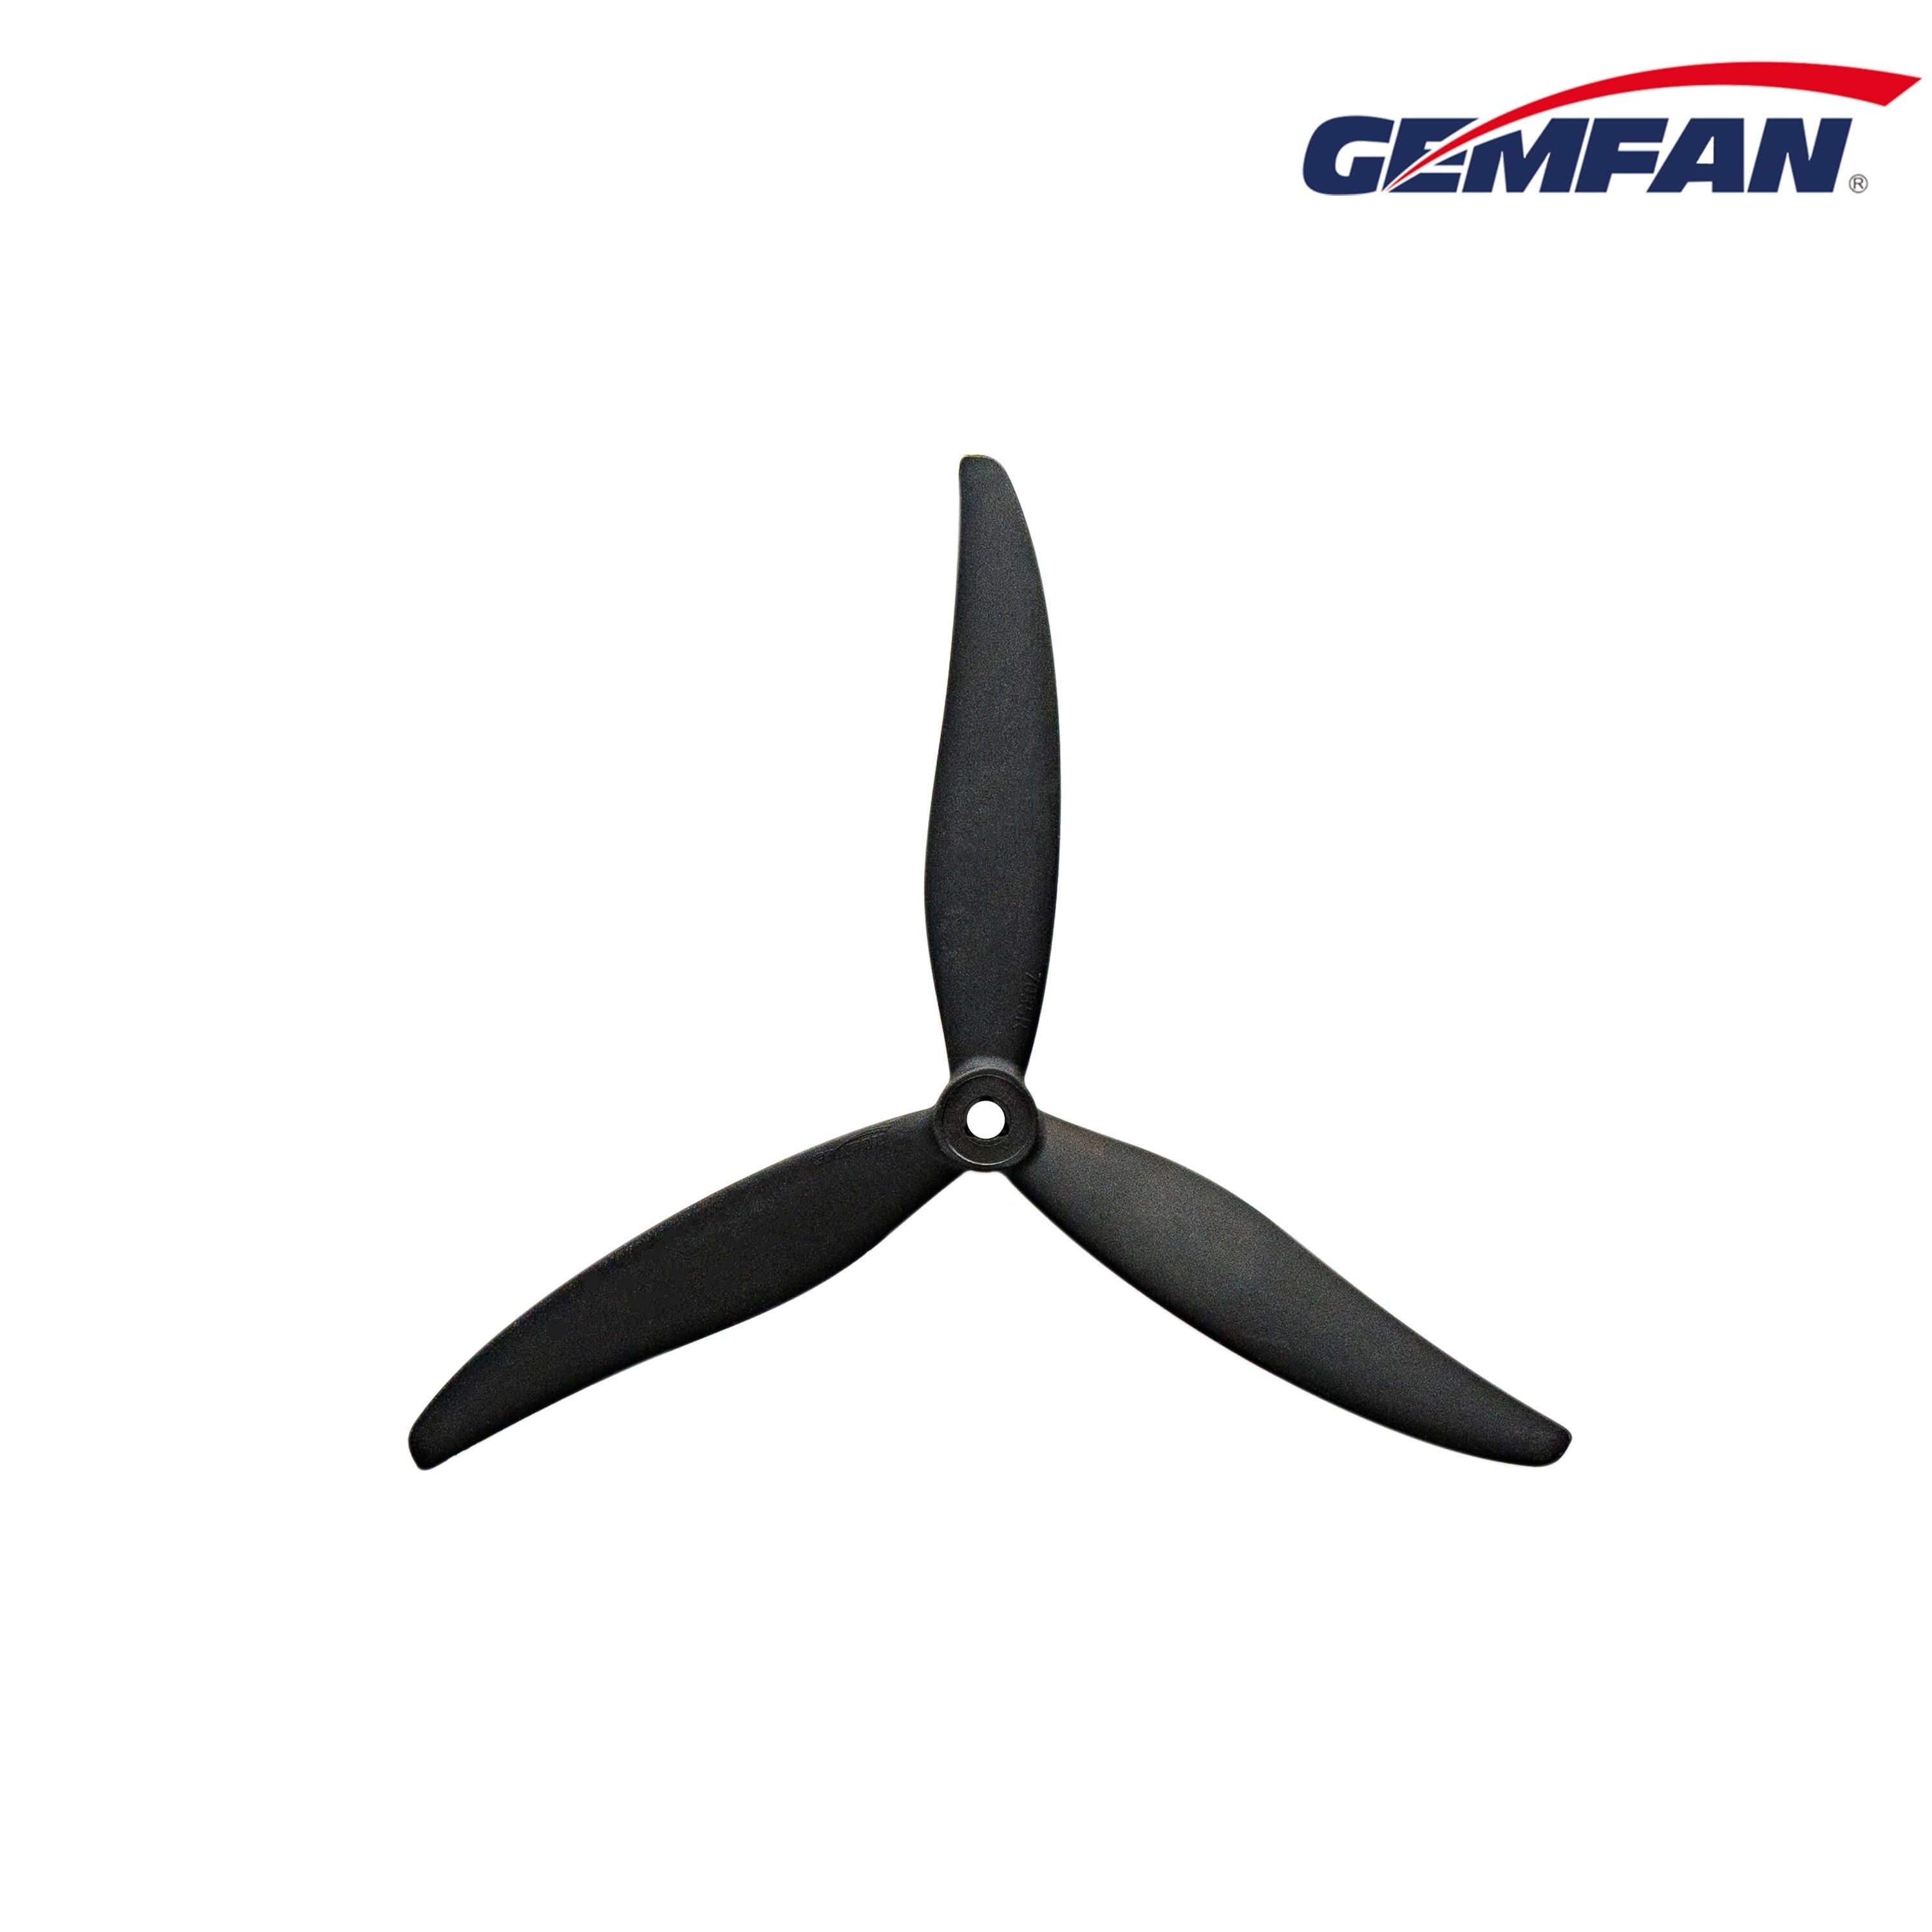 Gemfan 7035 CL Cinelifter 3-Blade Propeller Nylon Carbon (2CW+2CCW)